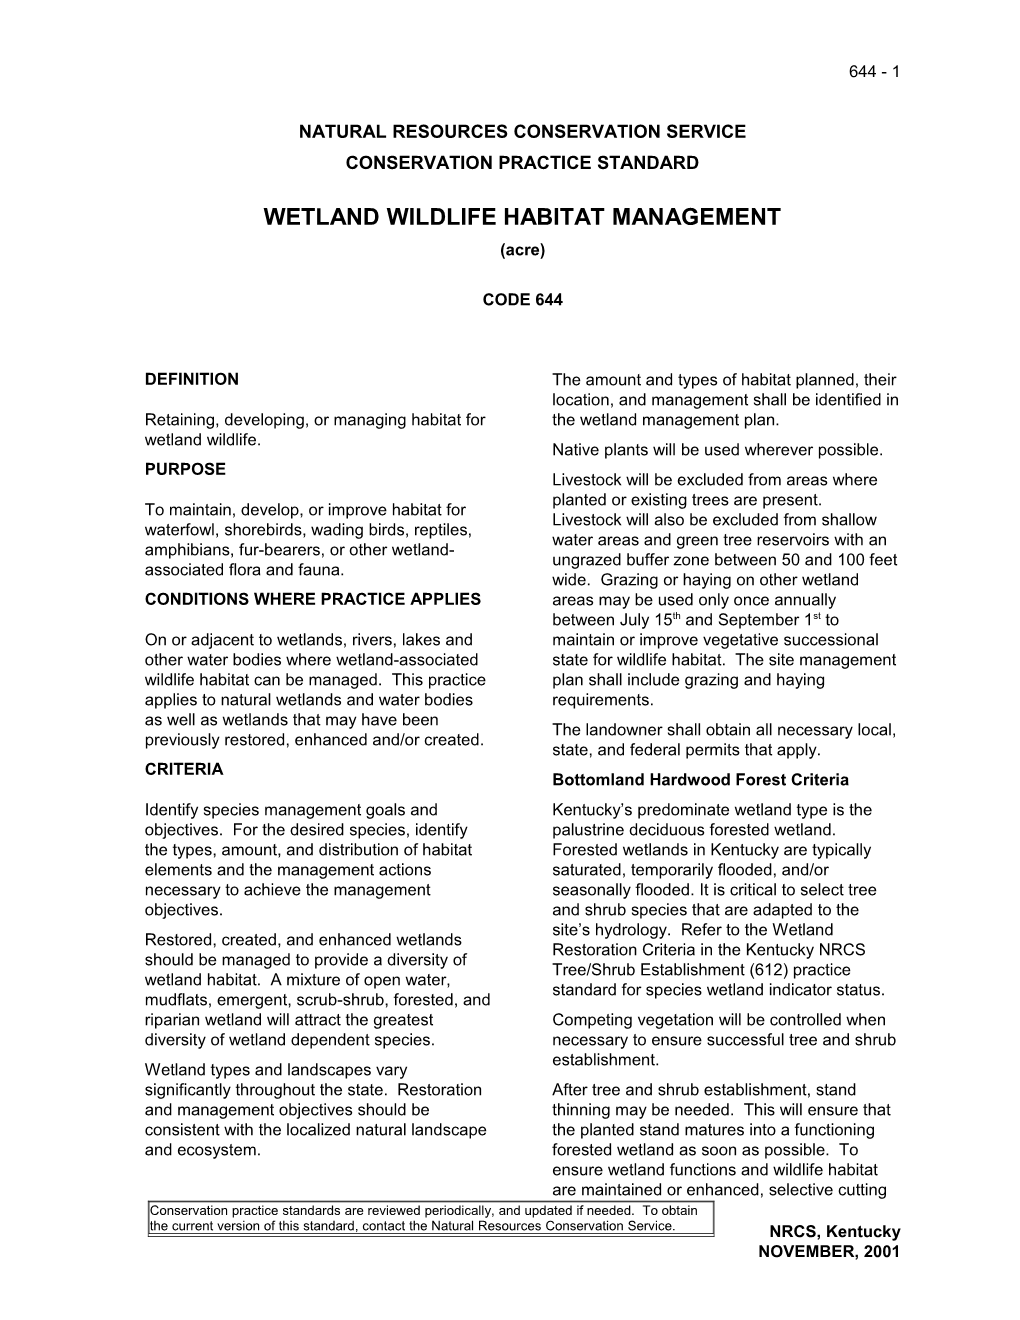 Wetland Wildlife Habitat Management 644